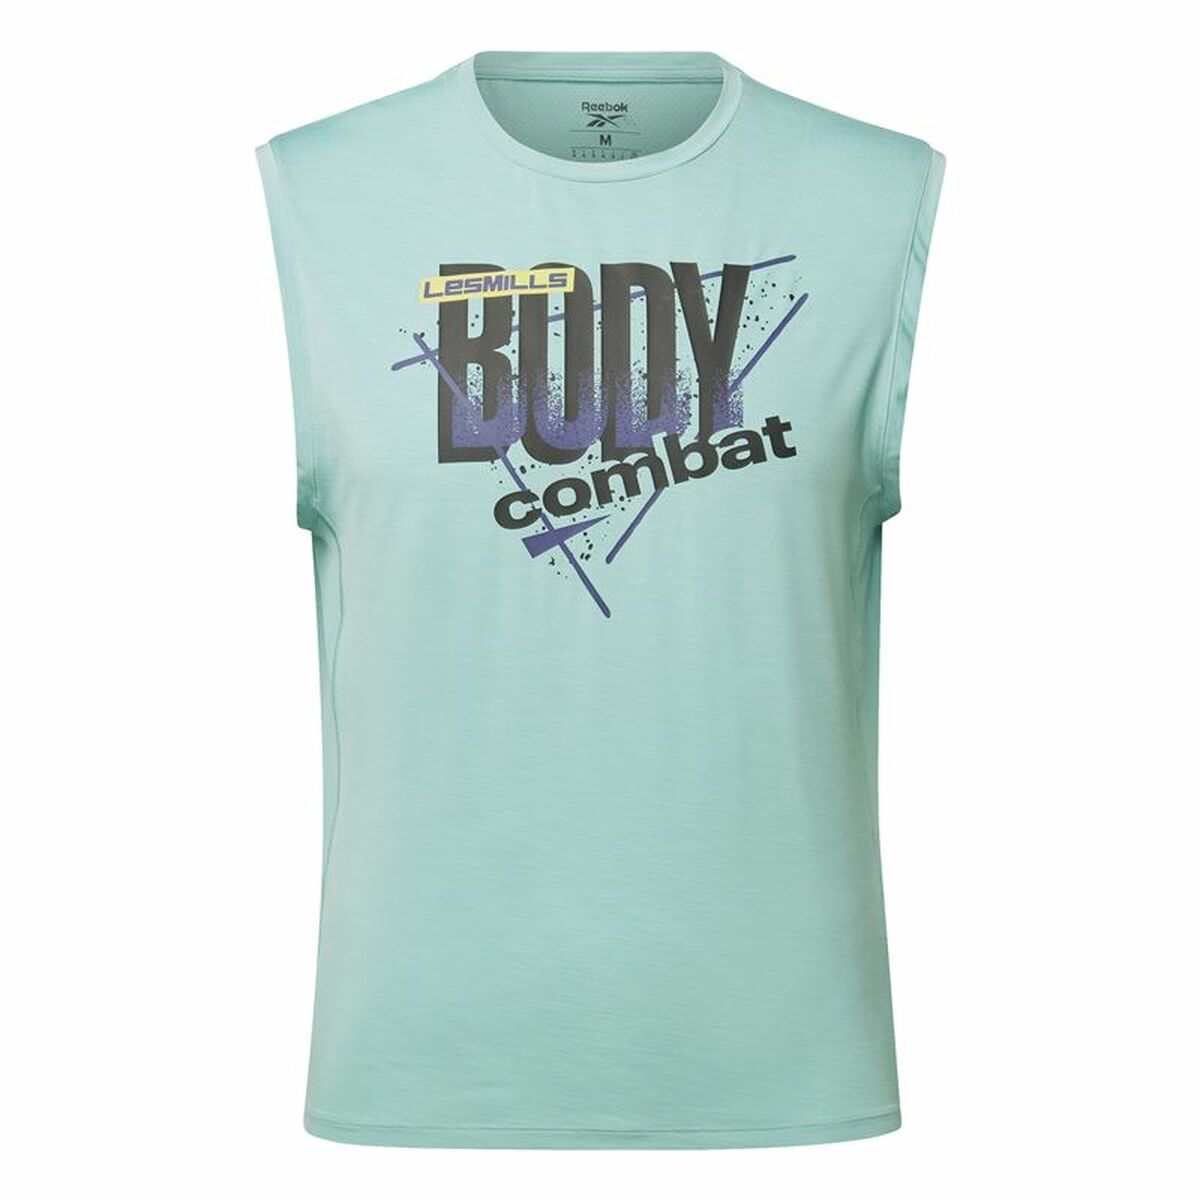 Men's Sleeveless T-shirt Reebok Les Mills® Activchill Blue - buy, price, reviews in Estonia sellme.ee